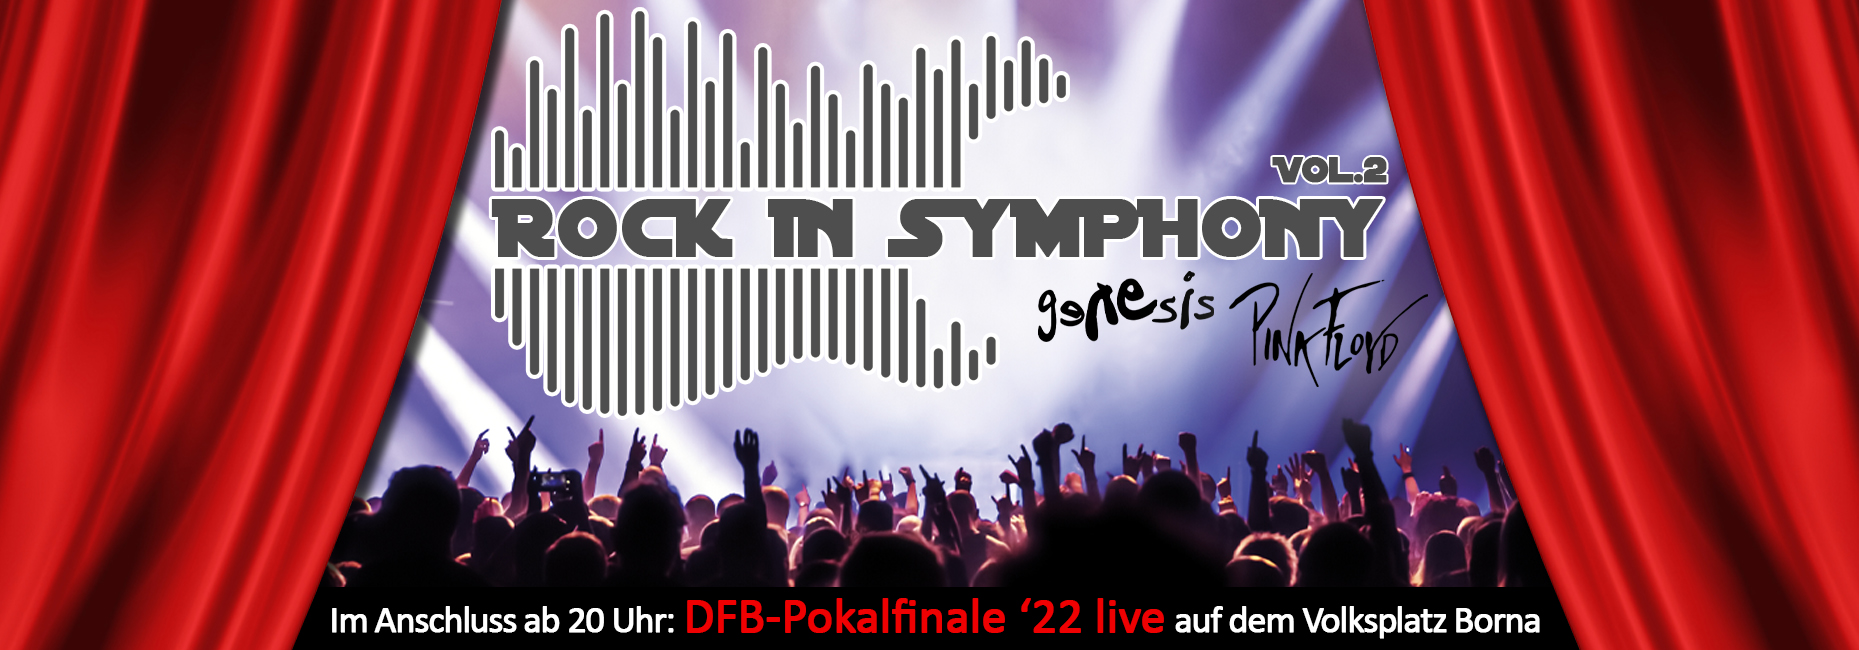 21. Mai '22 | 18:00 Rock in Symphony | Genesis & Pink Floyd